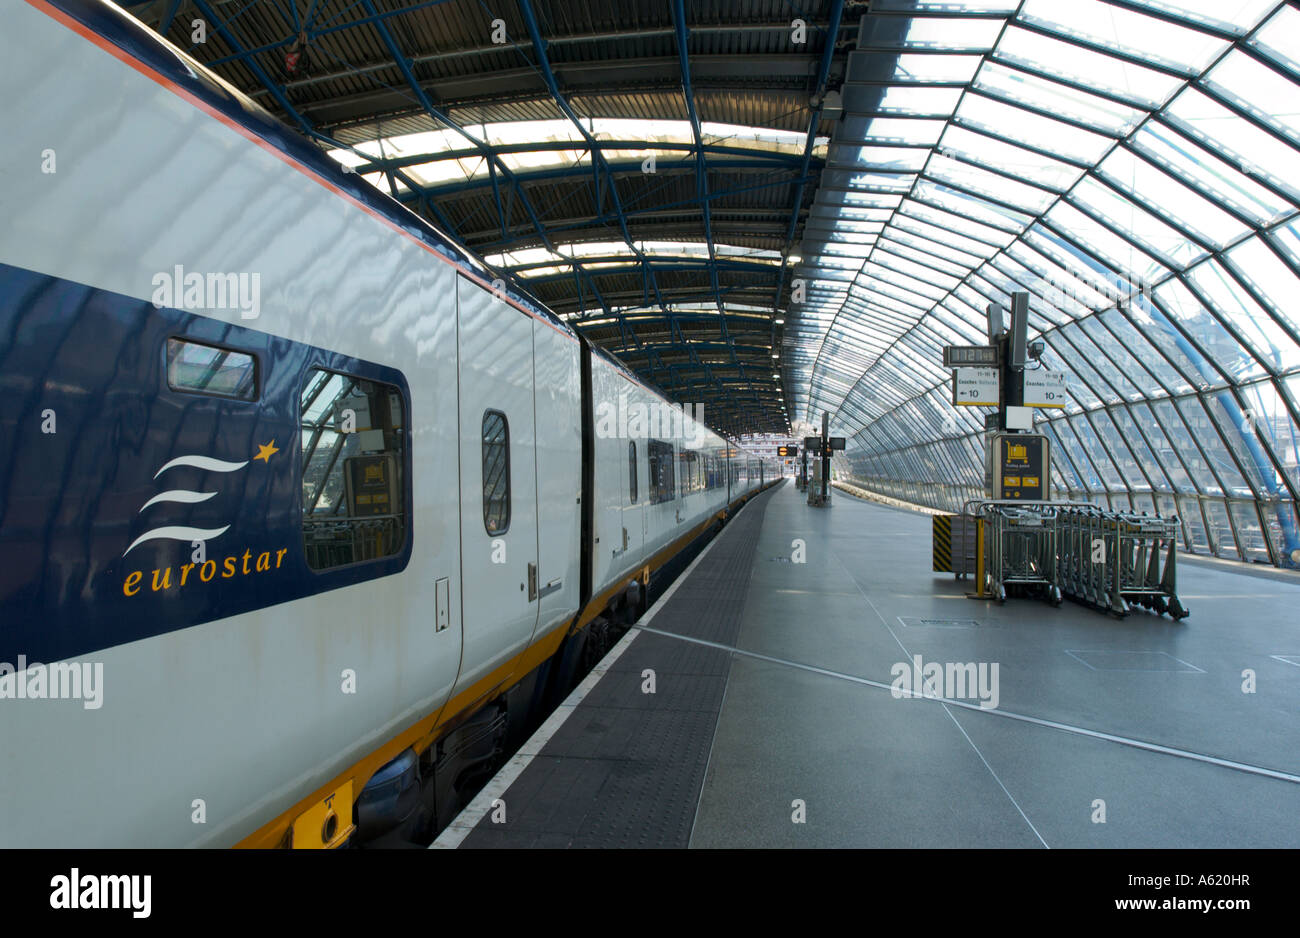 Eurostar train waiting at platform at Waterloo Station, London Stock Photo